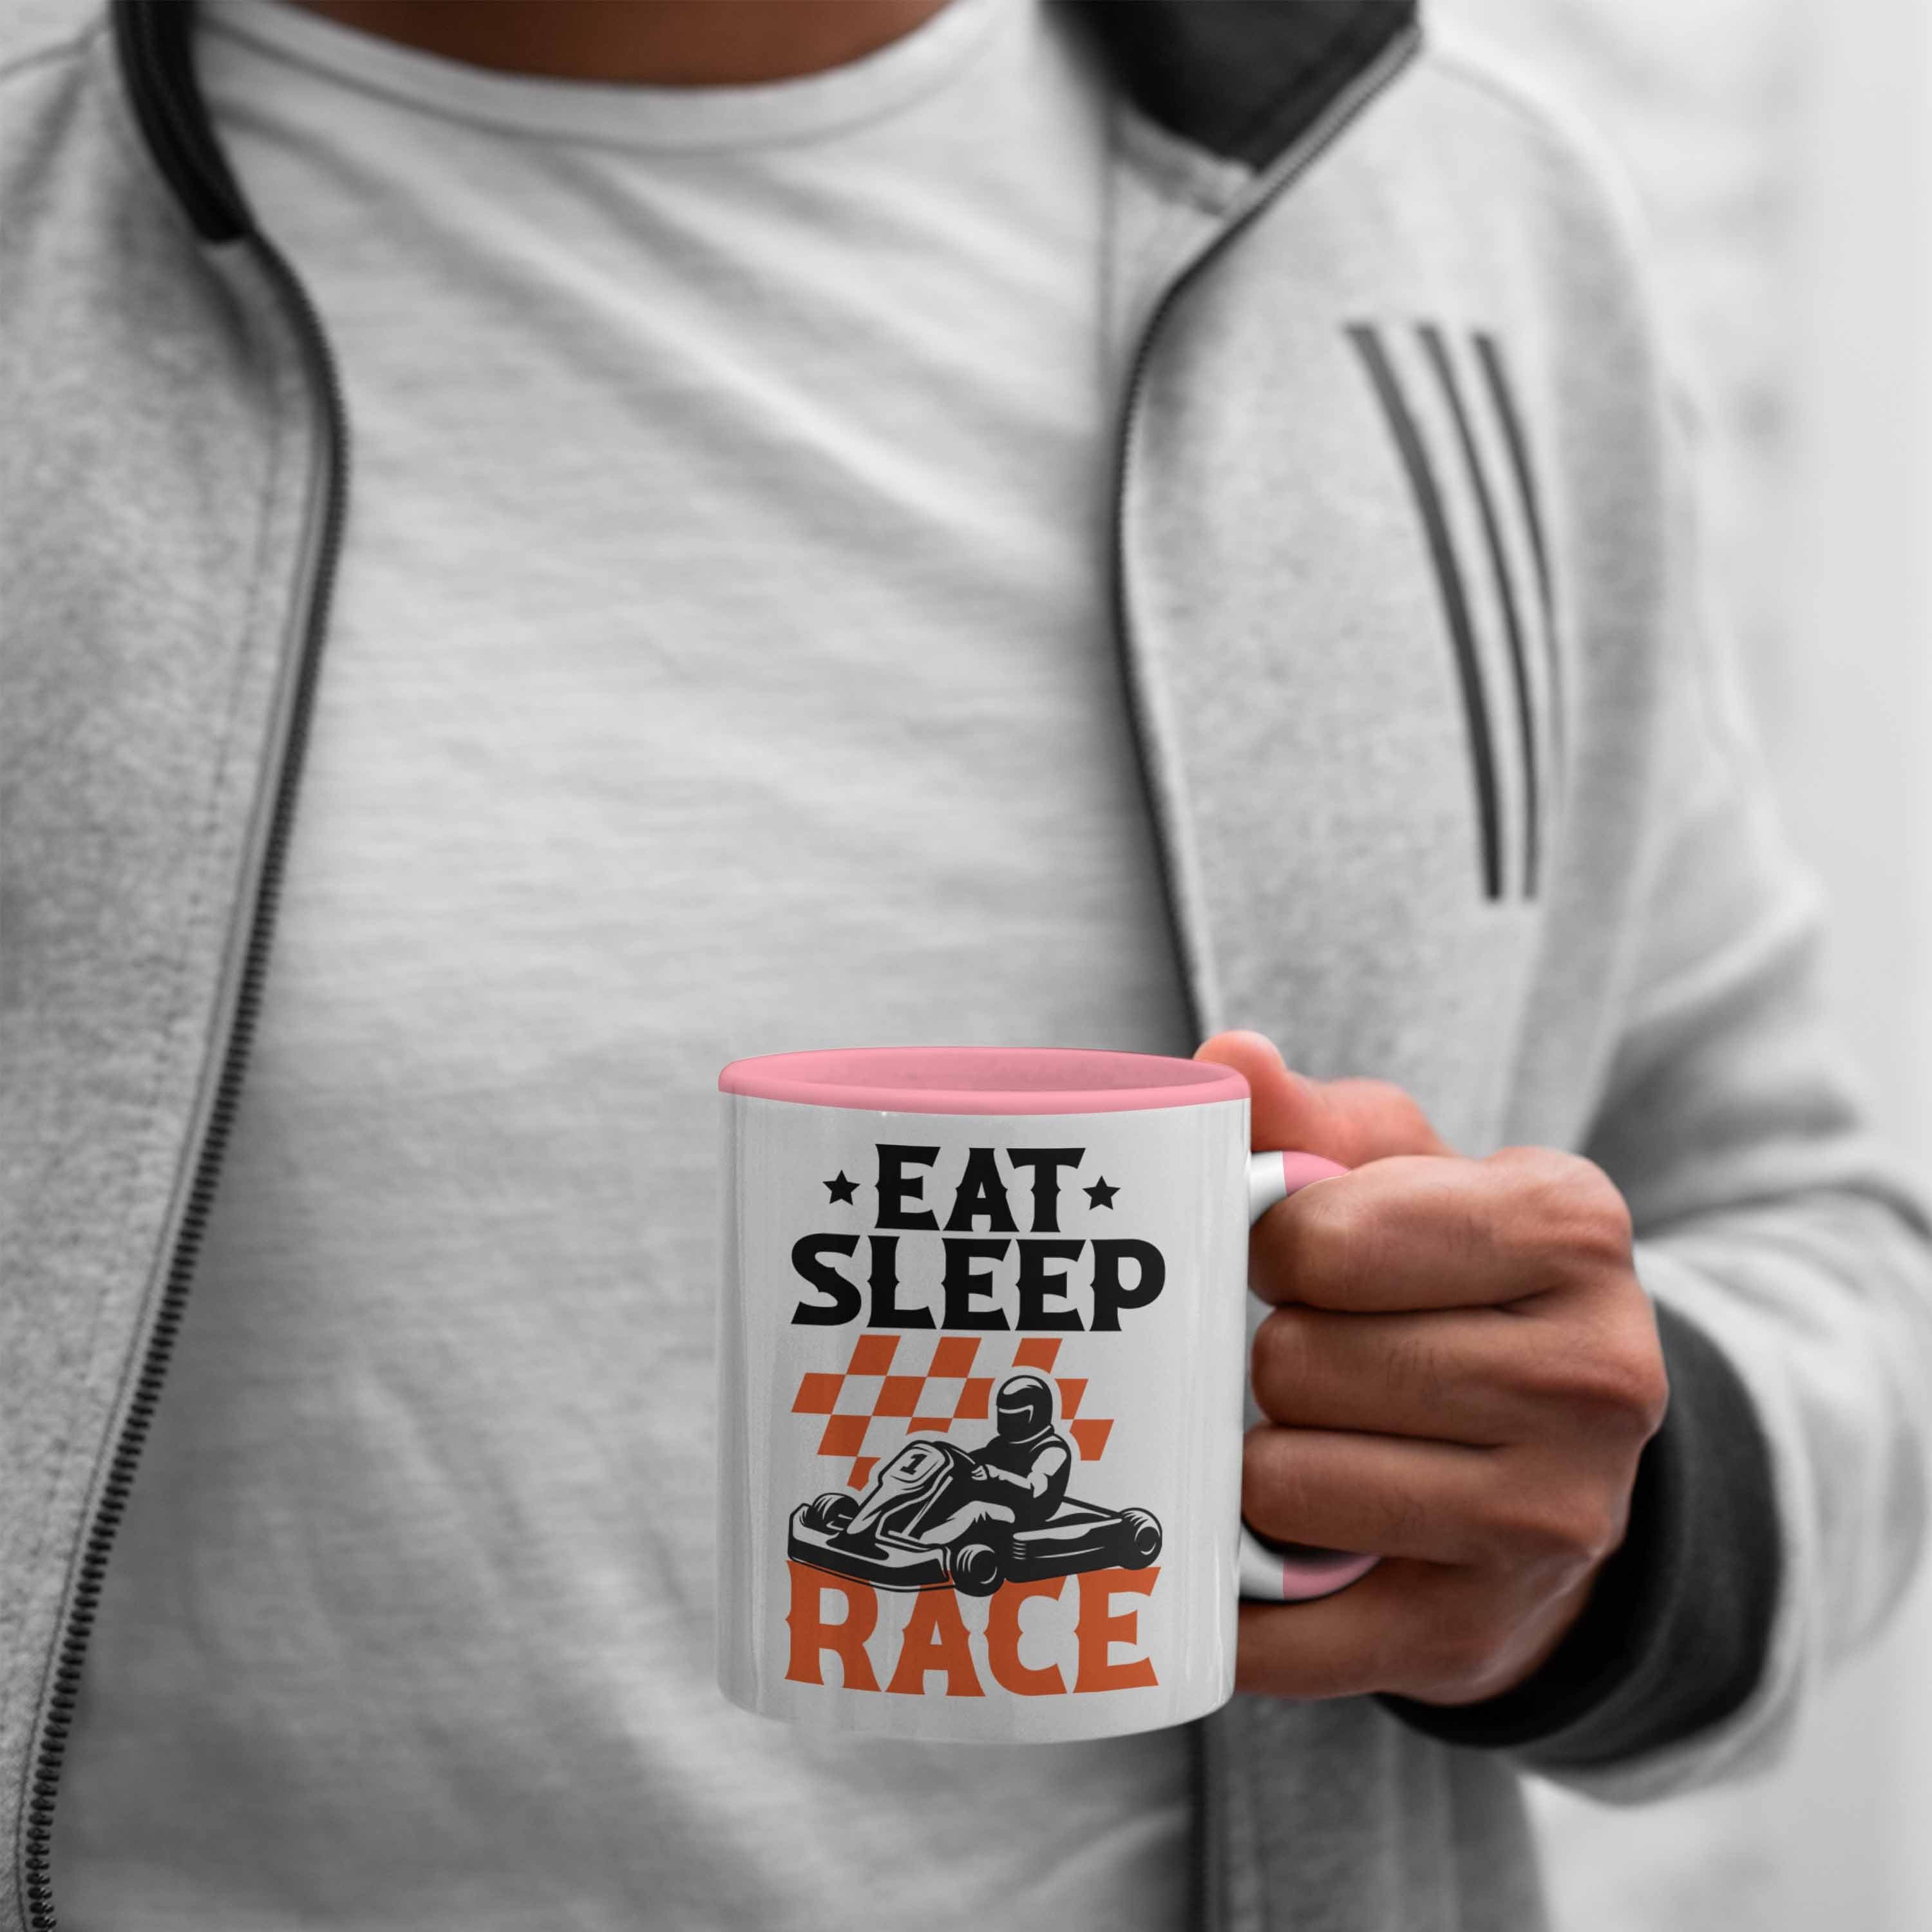 Rosa Gokart - Trendation Kart Tasse Geschenk Tasse Eat Racing Rennfahrer Race Go Trendation Fahrer Sleep